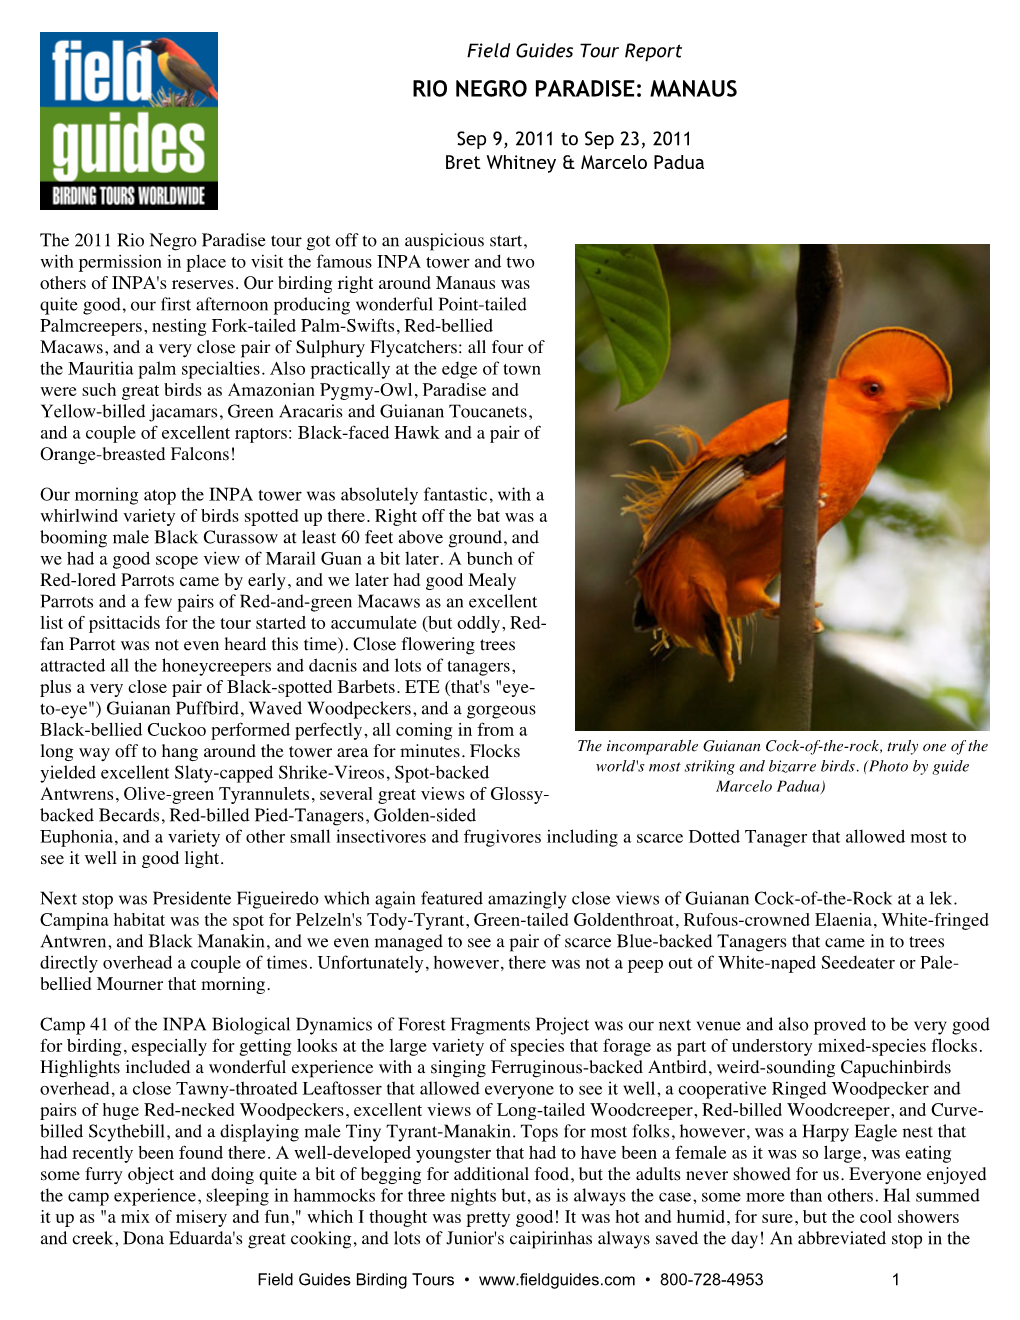 Field Guides Birding Tours: Rio Negro Paradise: Manaus